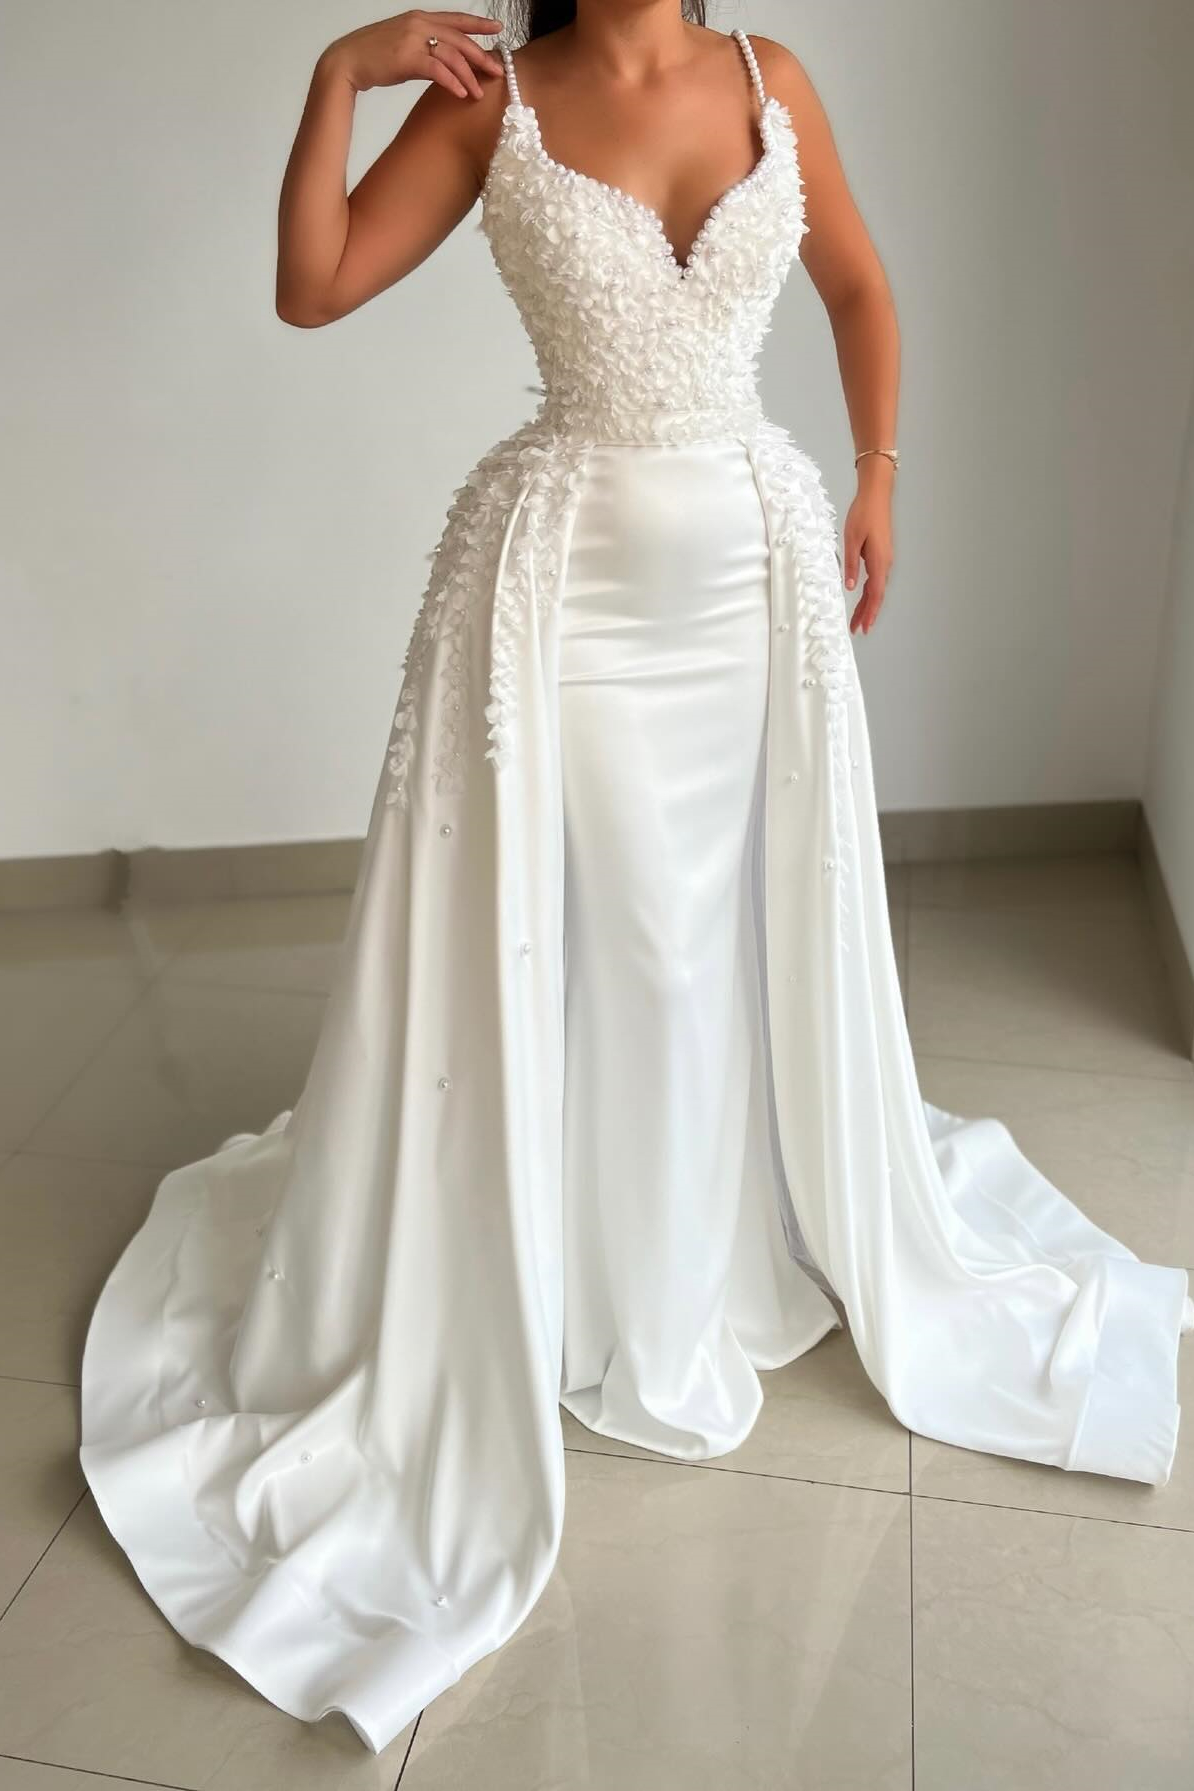 Stunning White Spaghetti-Straps Mermaid Prom Dresses With Pearls Overskirt Sleeveless - lulusllly